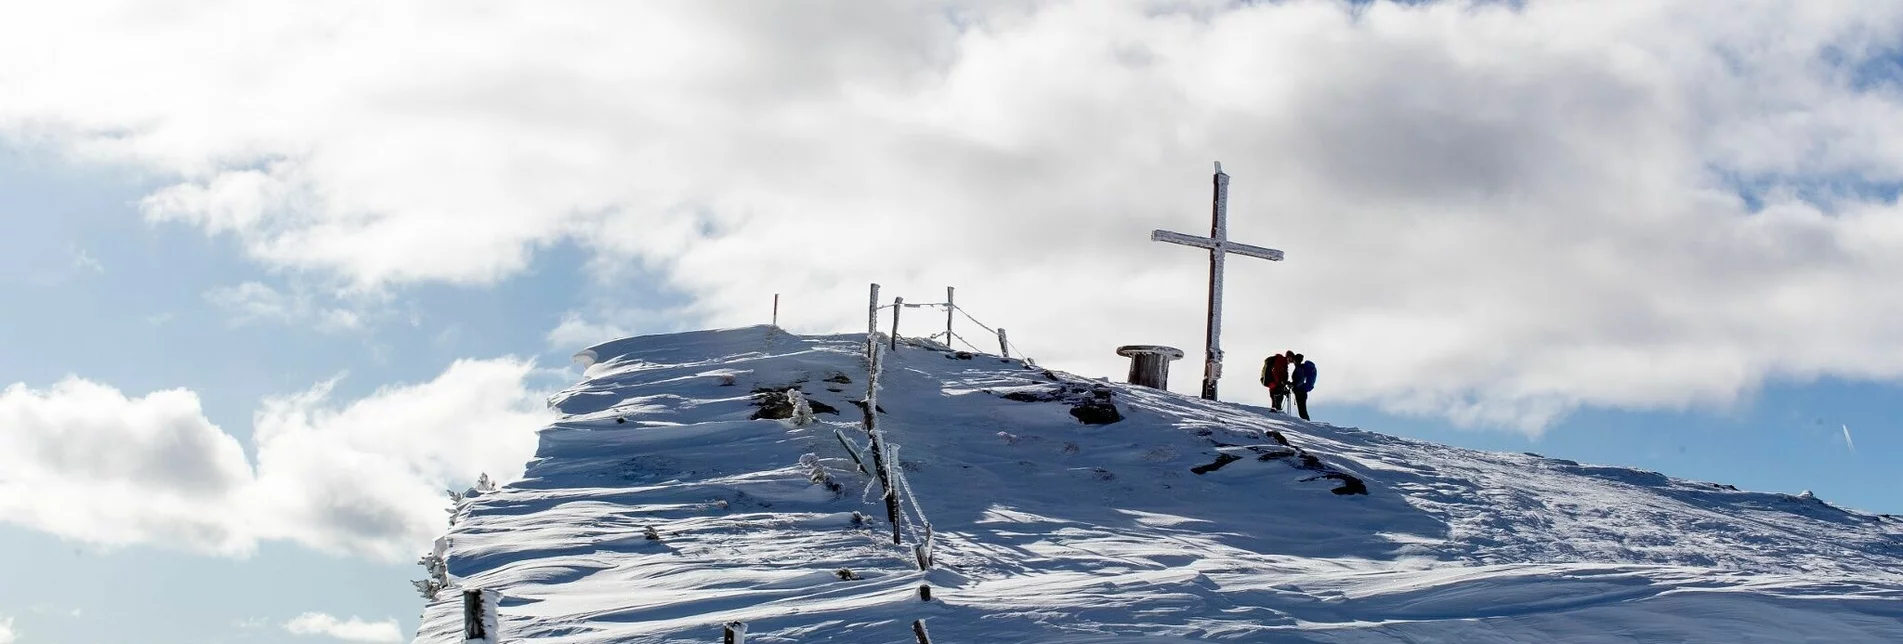 Winterwandern Skitour Frauenalpe - Touren-Impression #1 | © Tourismusverband Region Murau